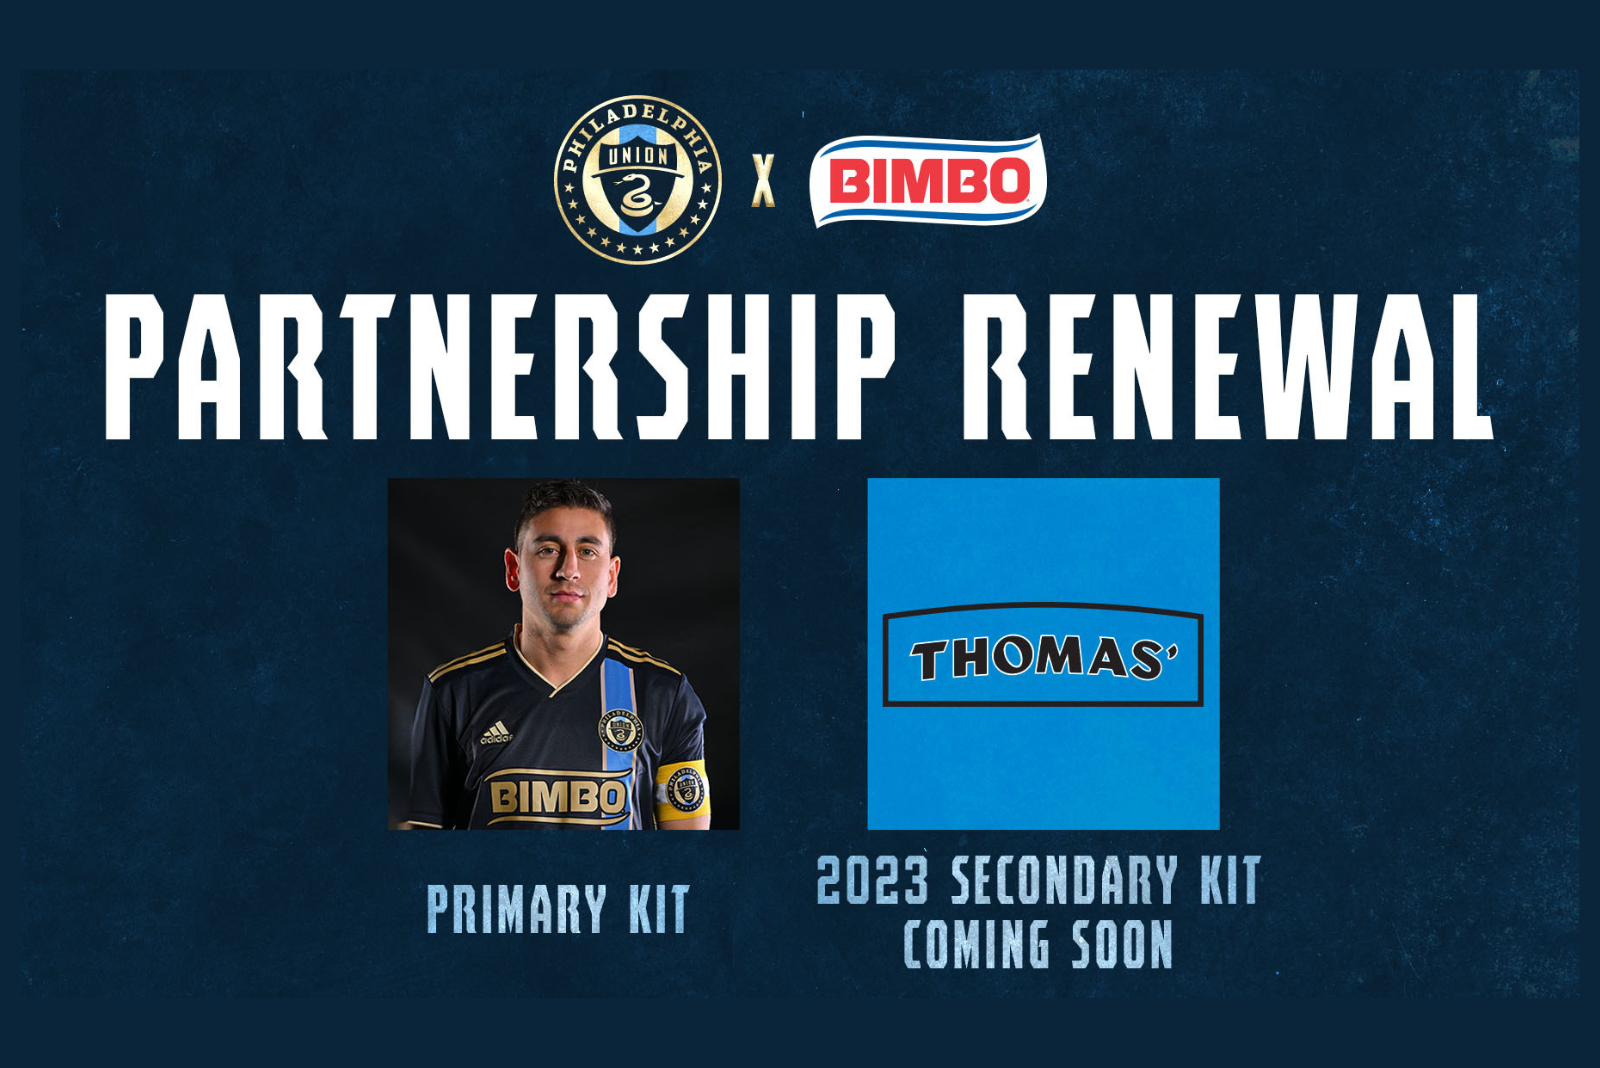 Union pivot away from Bimbo, unveil Artesano as secondary kit sponsor –  Philly Sports